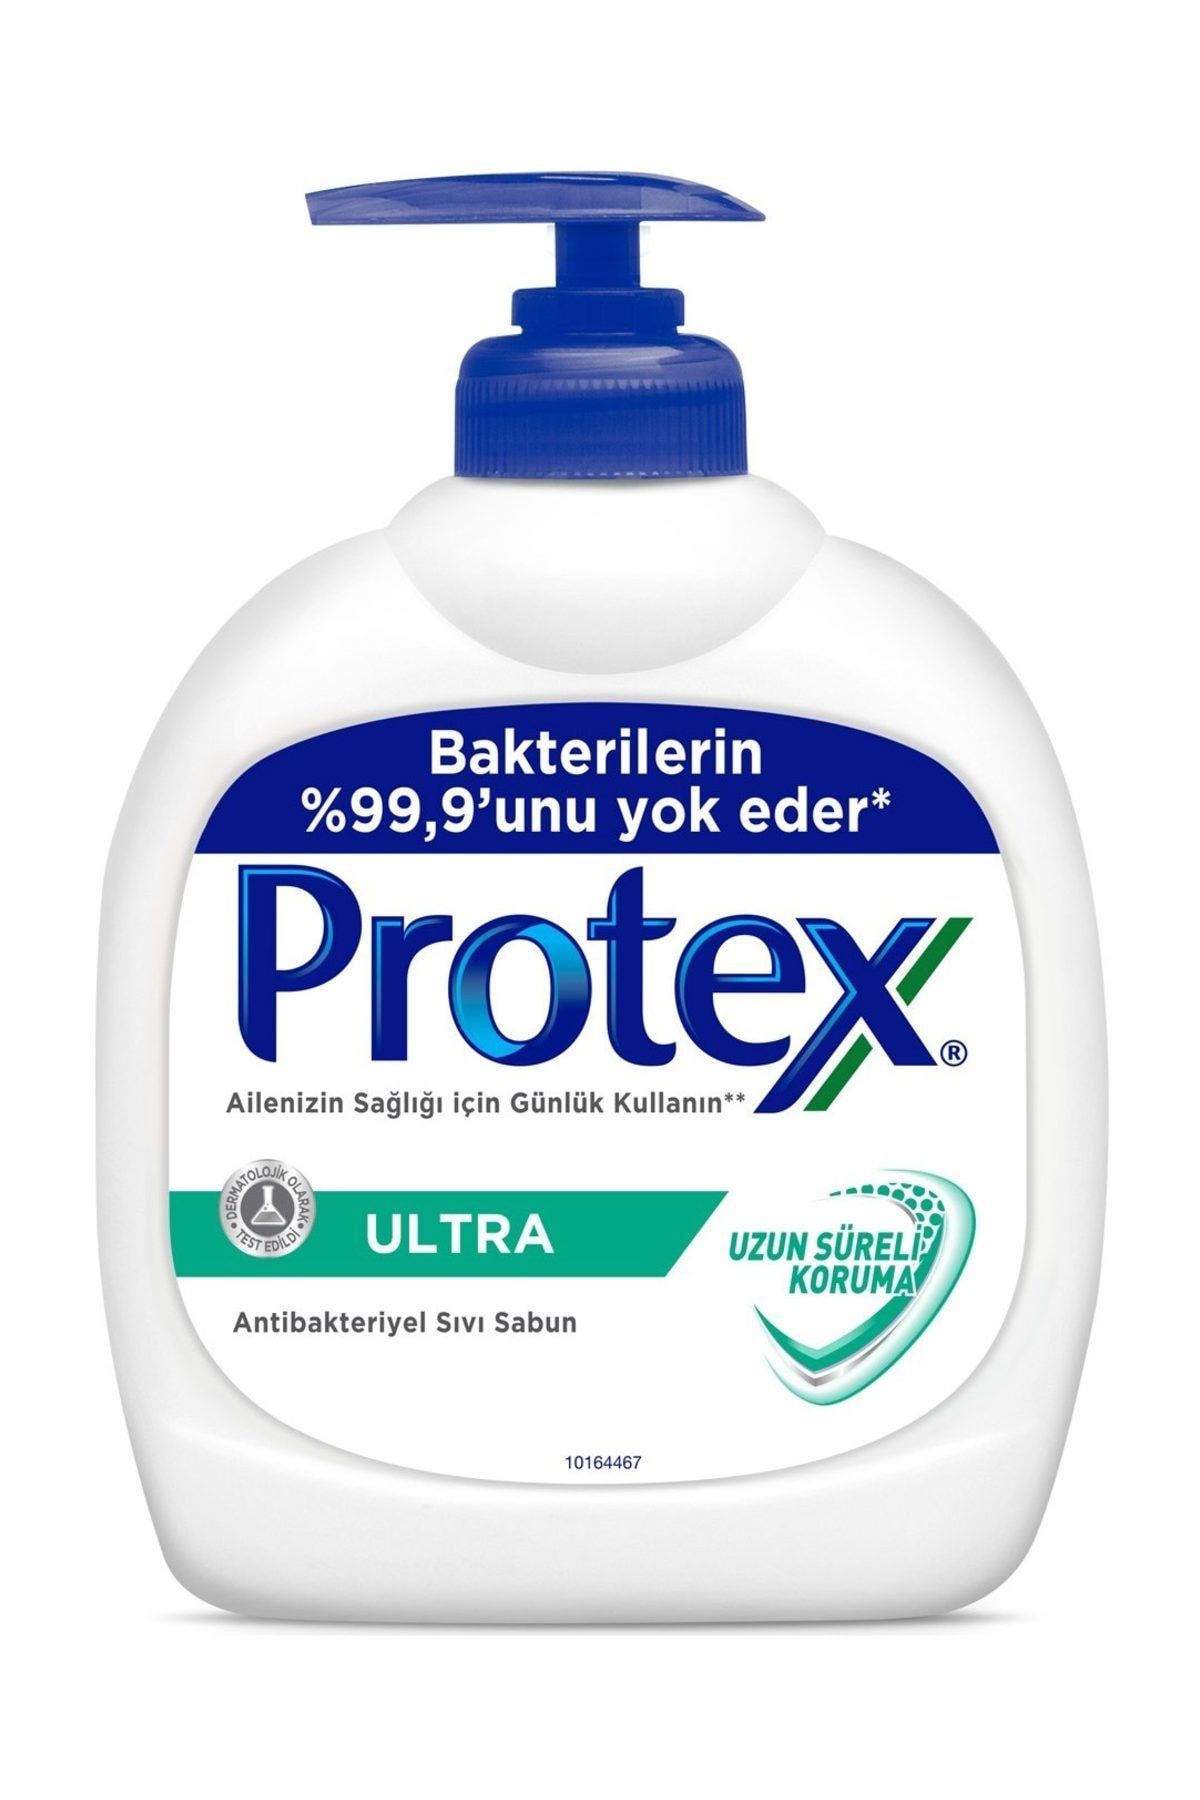 Protex Antibakteriyel Sıvı Sabun Ultra 500 ml 2 Adet